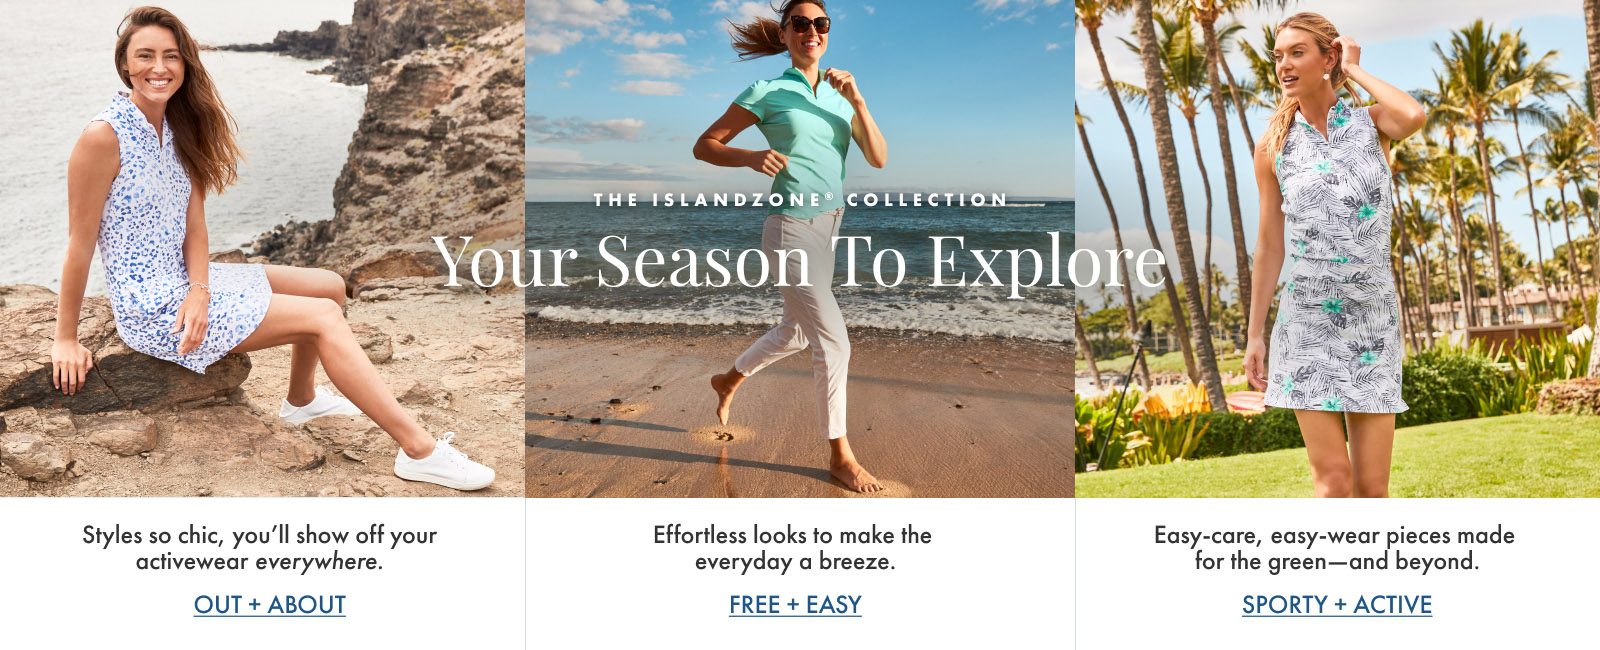 The IslandZone® Collection - Your Season To Explore